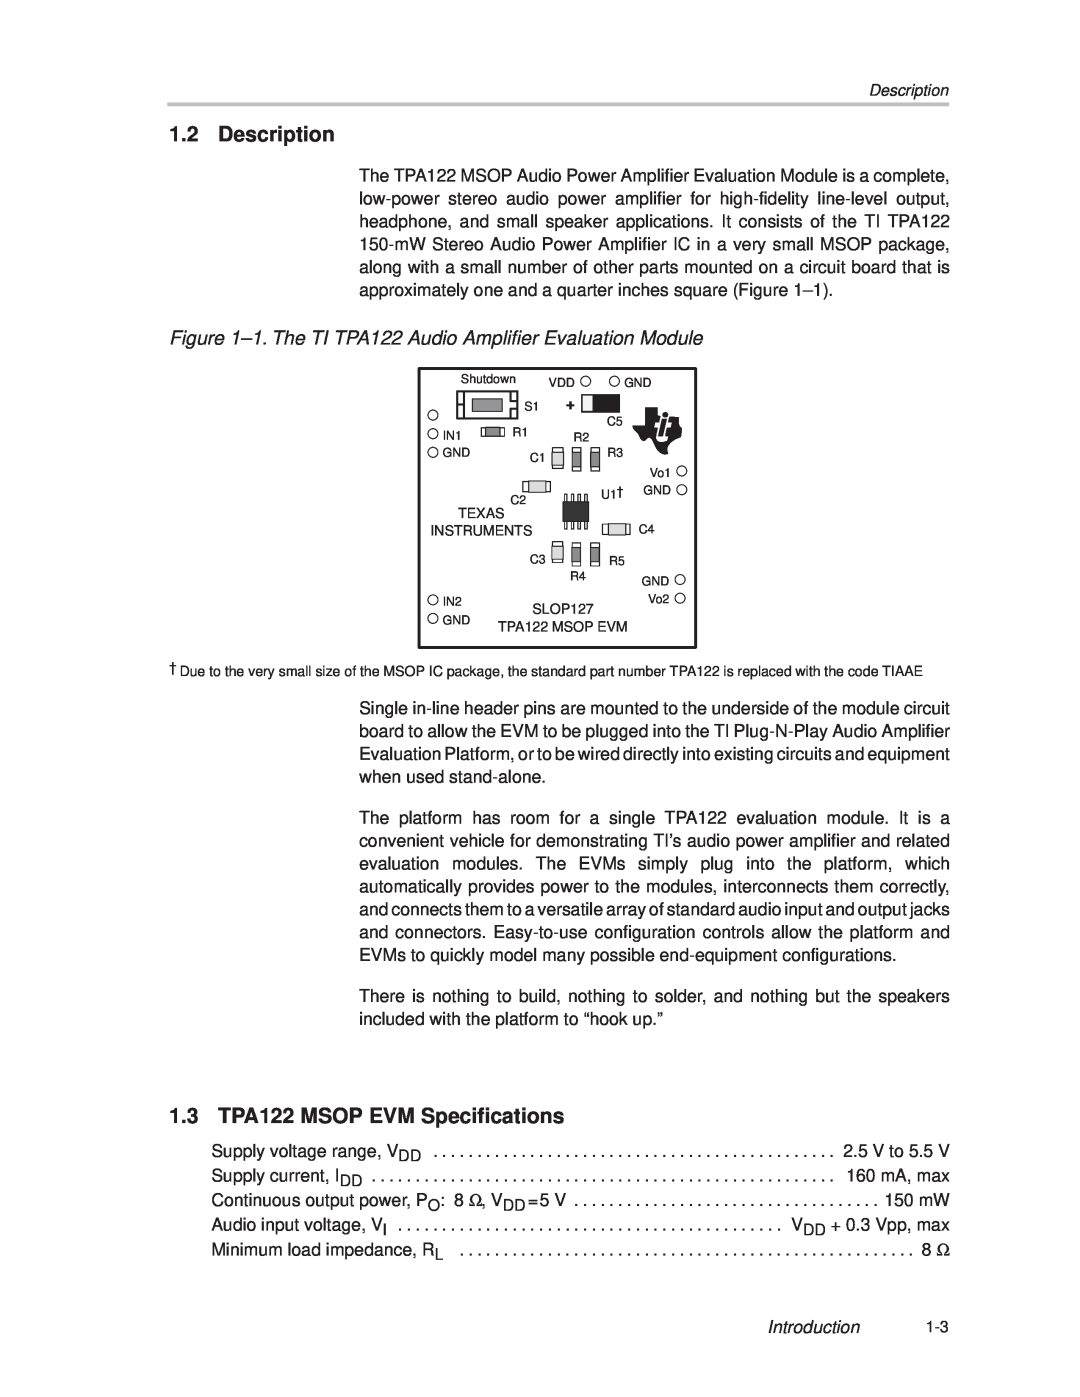 Texas Instruments SLOU025 manual Description, 1.3 TPA122 MSOP EVM Specifications, Introduction 